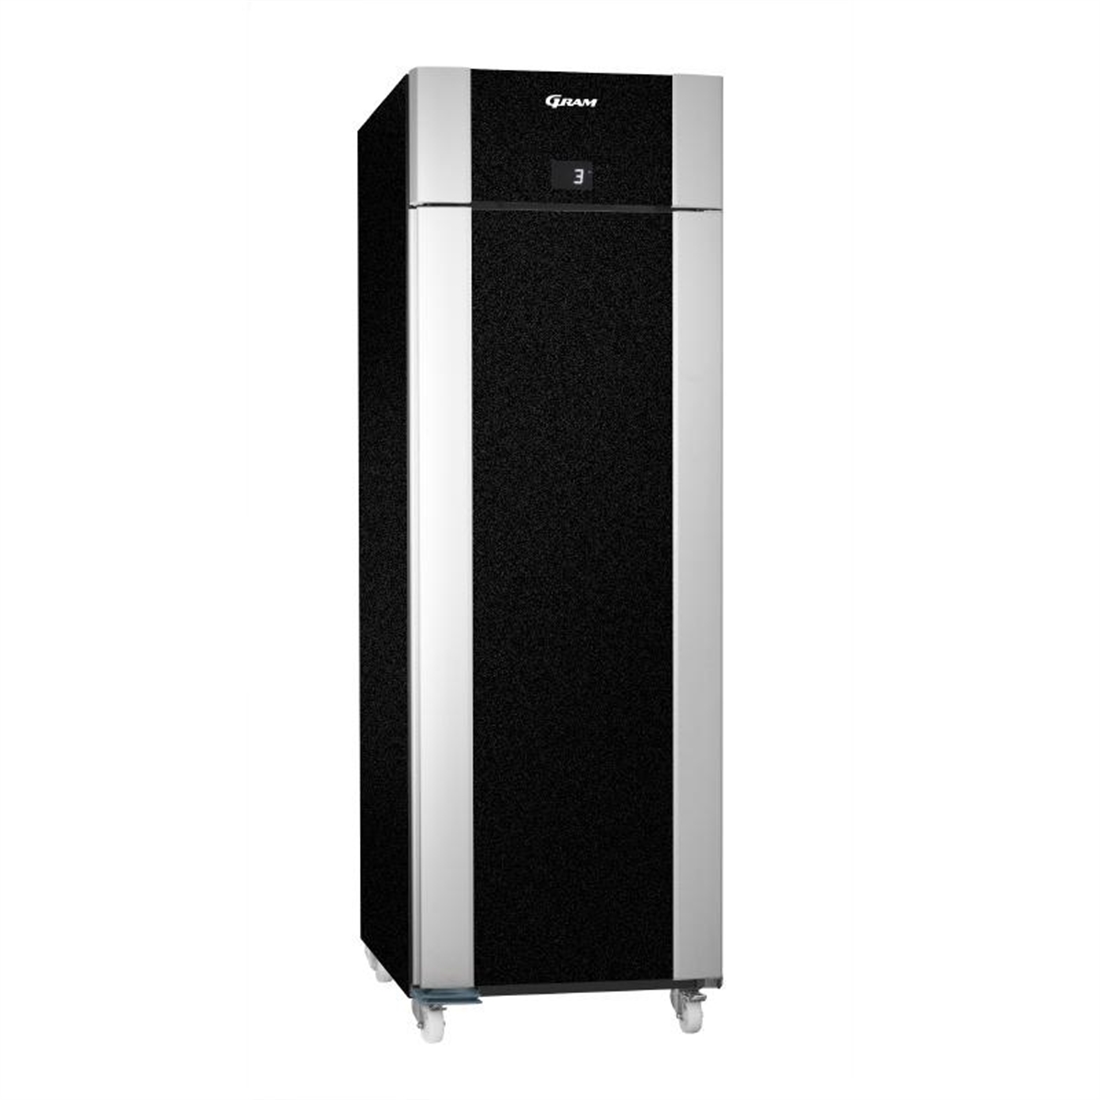 Gram Eco Plus 1 Door 610Ltr Freezer Black F 70 BAG C1 4N